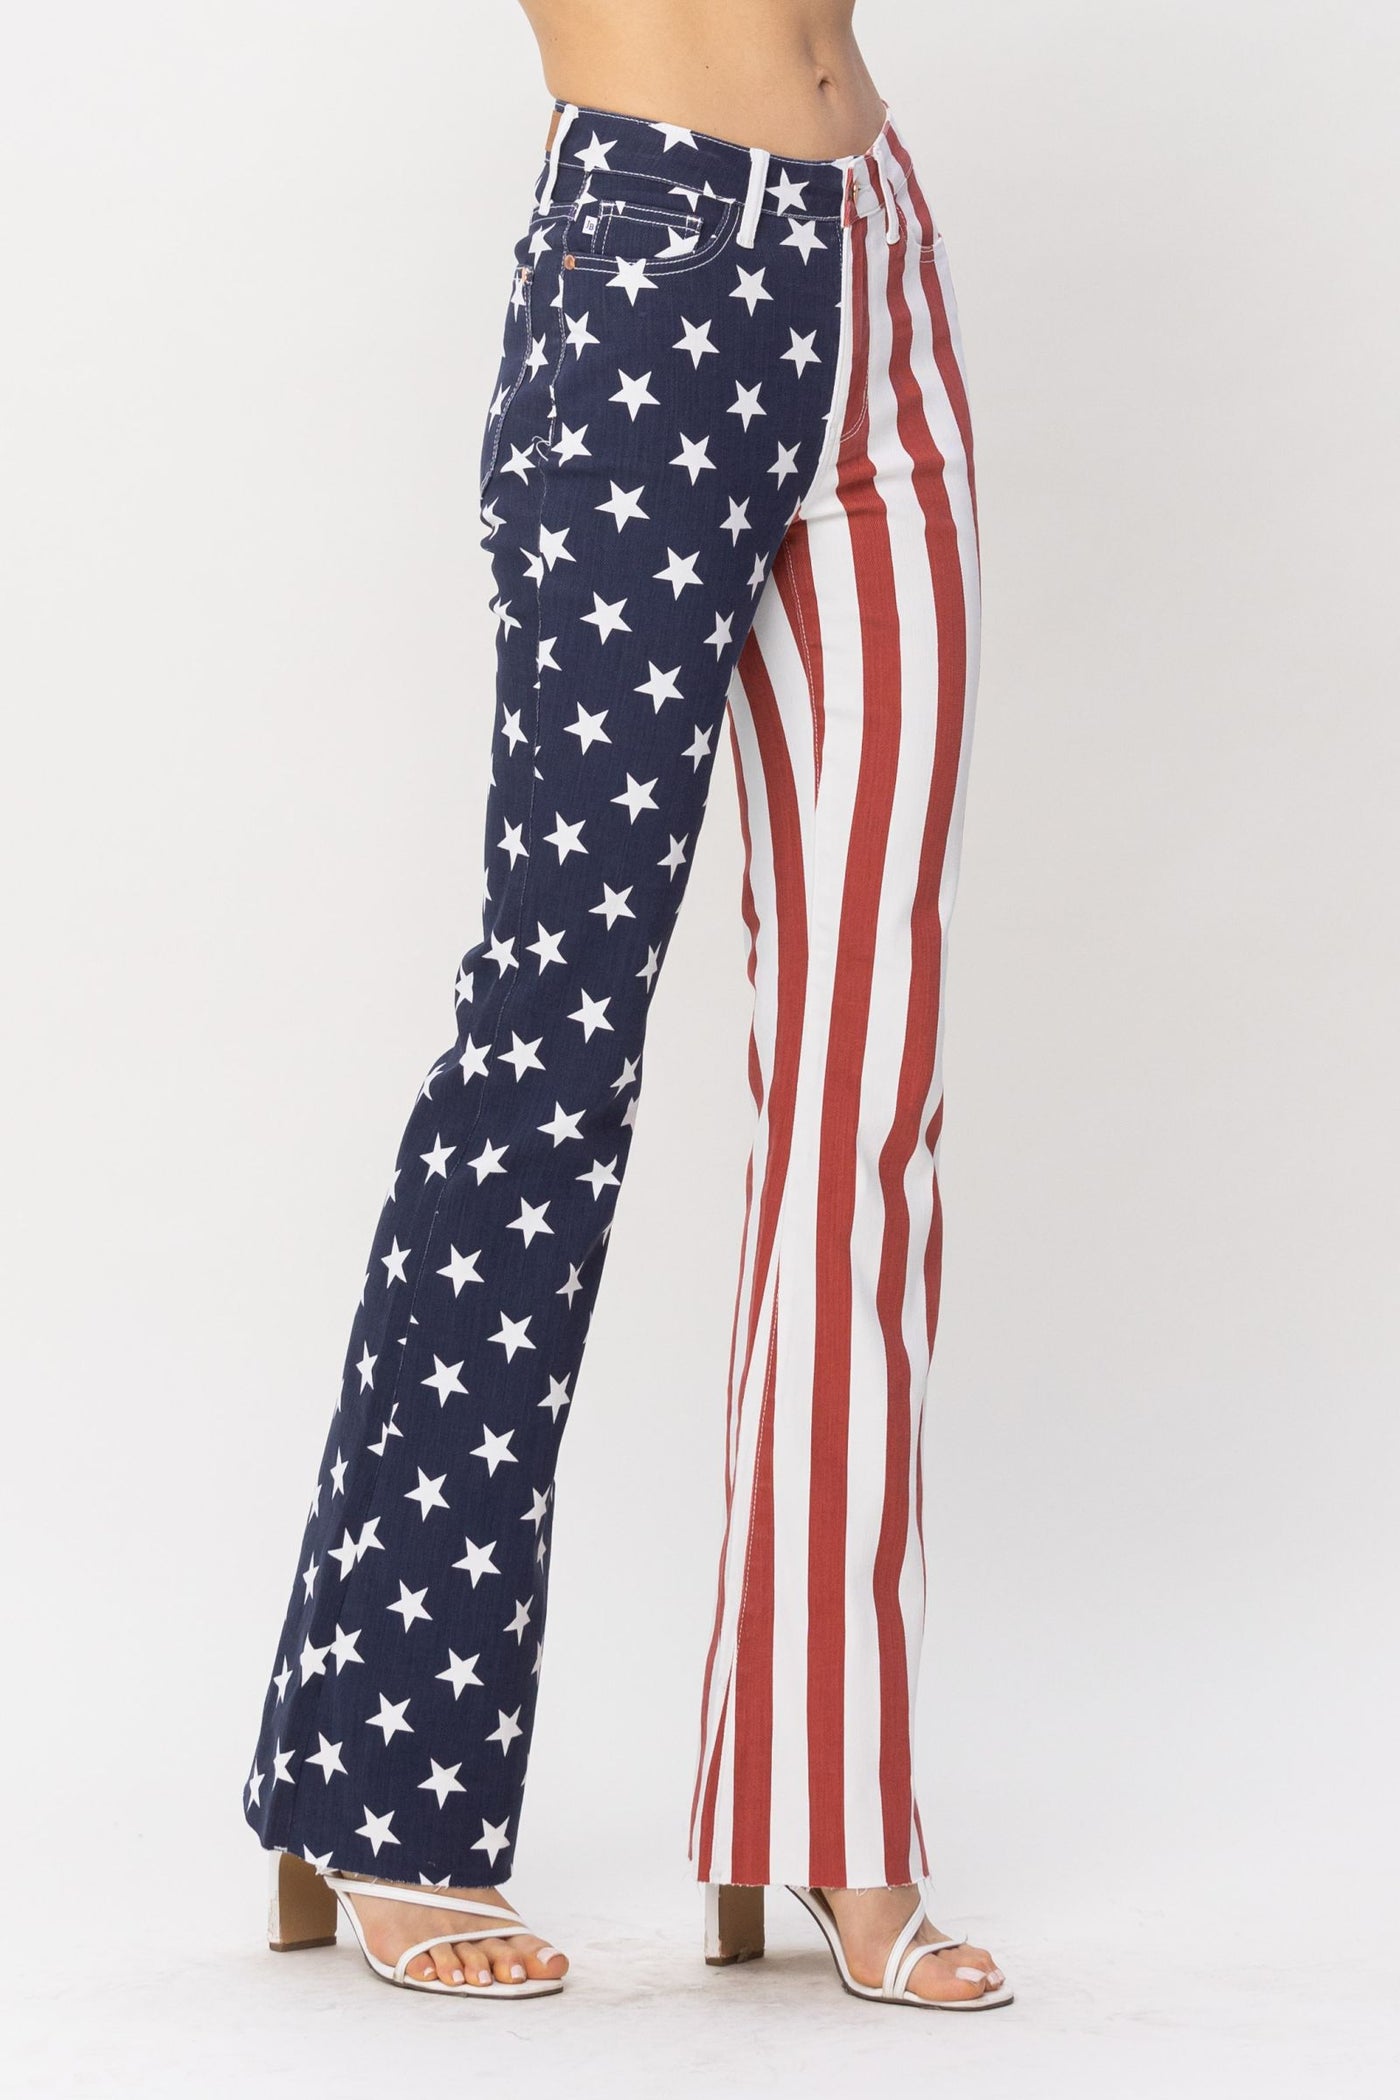 Judy Blue Americana Flag Flare Jeans